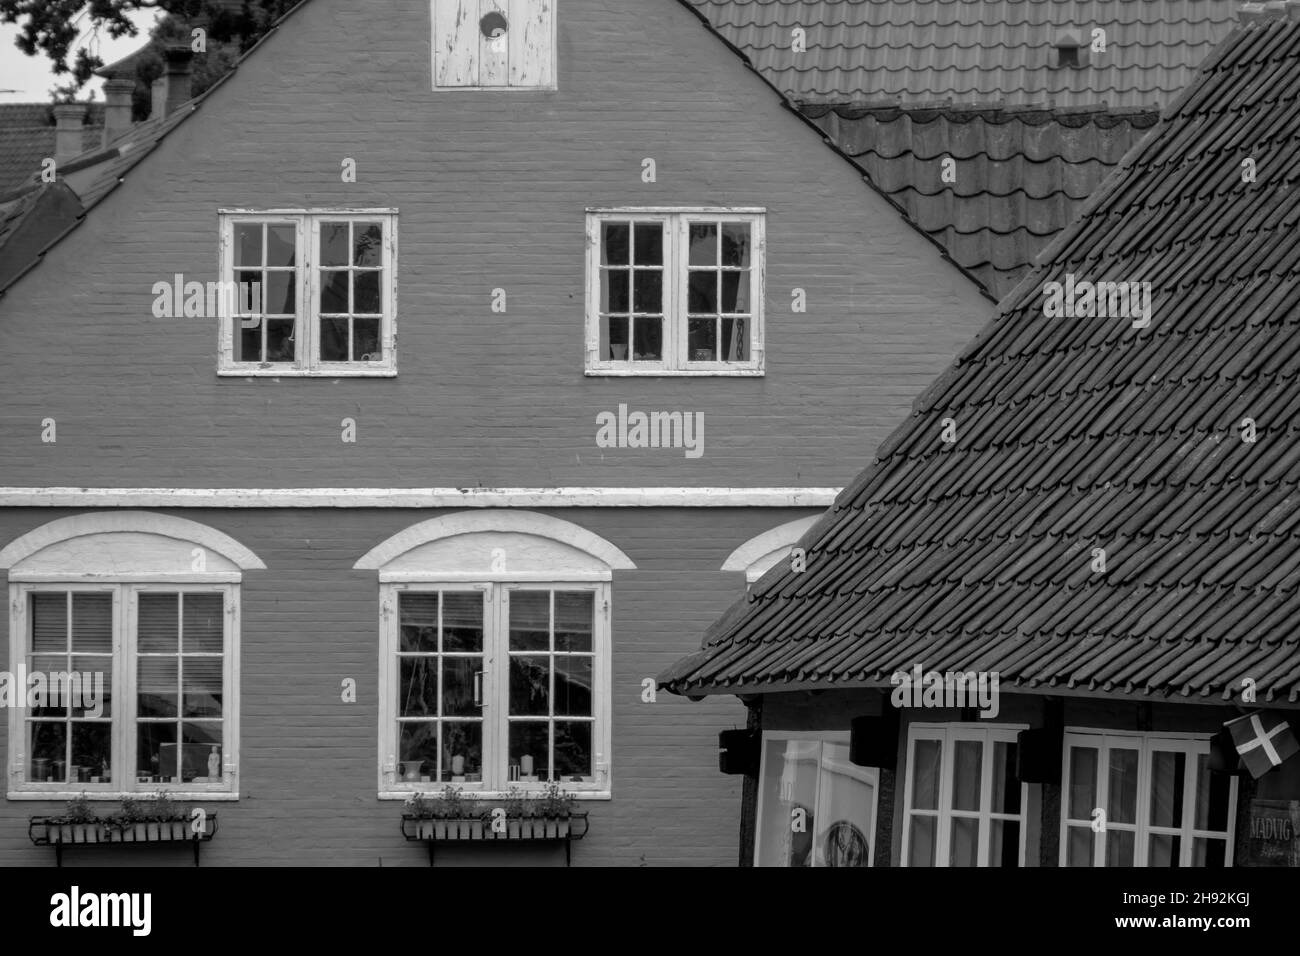 Bornholm Black and White Stock Photos & Images - Alamy